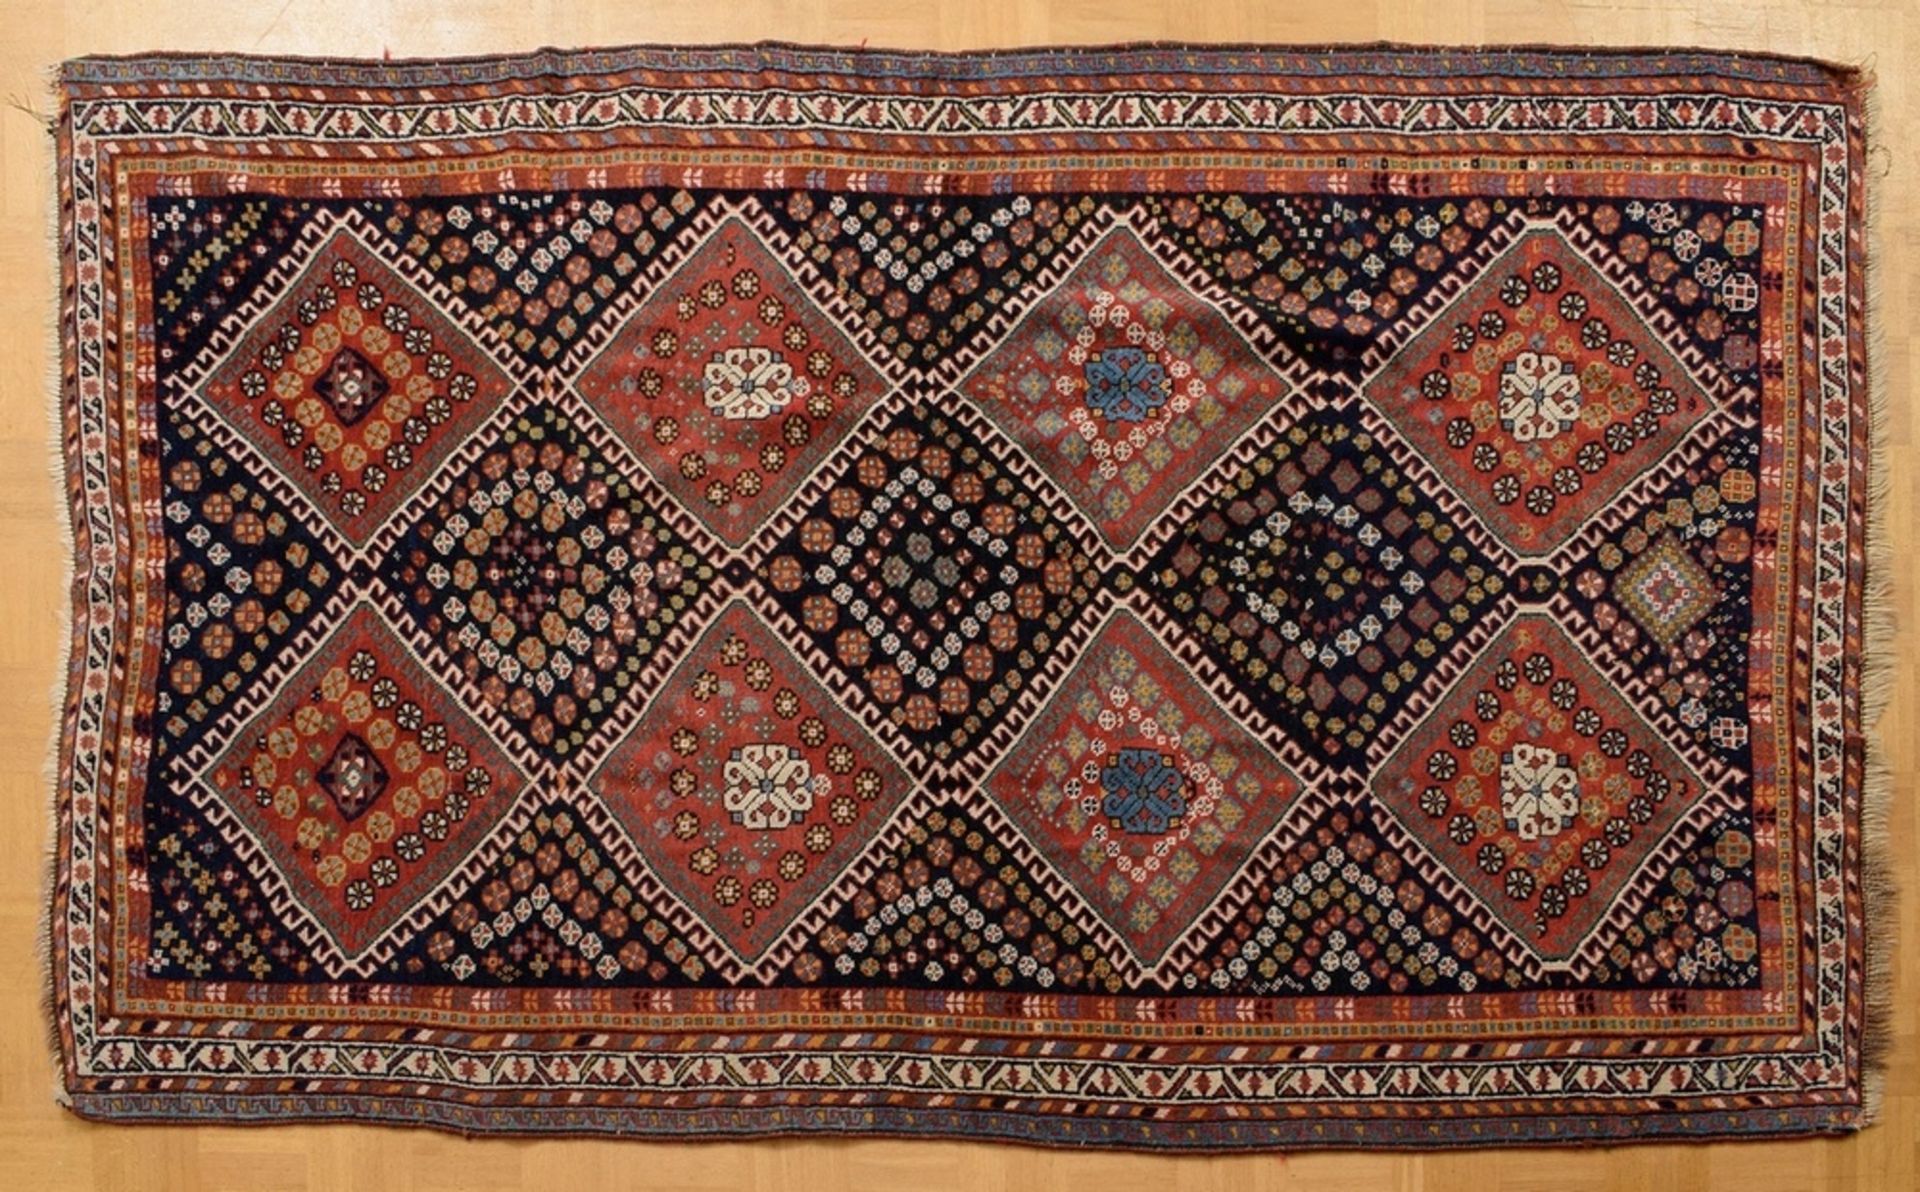 Luri Teppich mit Rapport roter und nachtblauer R | A Luri carpet with a rapport of red and midnight - Bild 2 aus 8